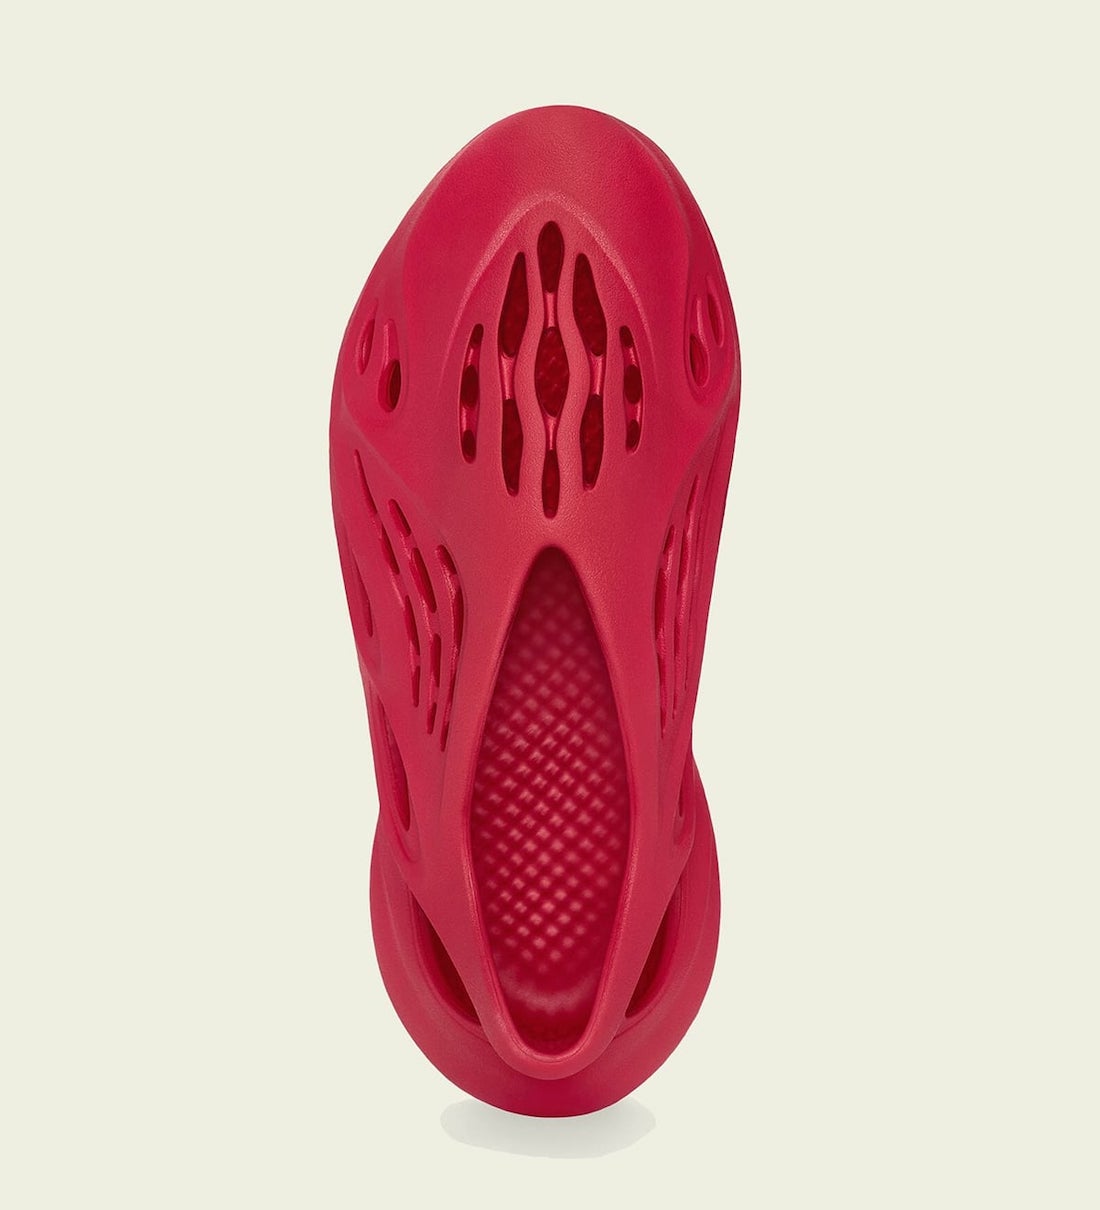 Red-adidas-Yeezy-Foam-Runner-Vermillion-GW3355-Release-Date-3